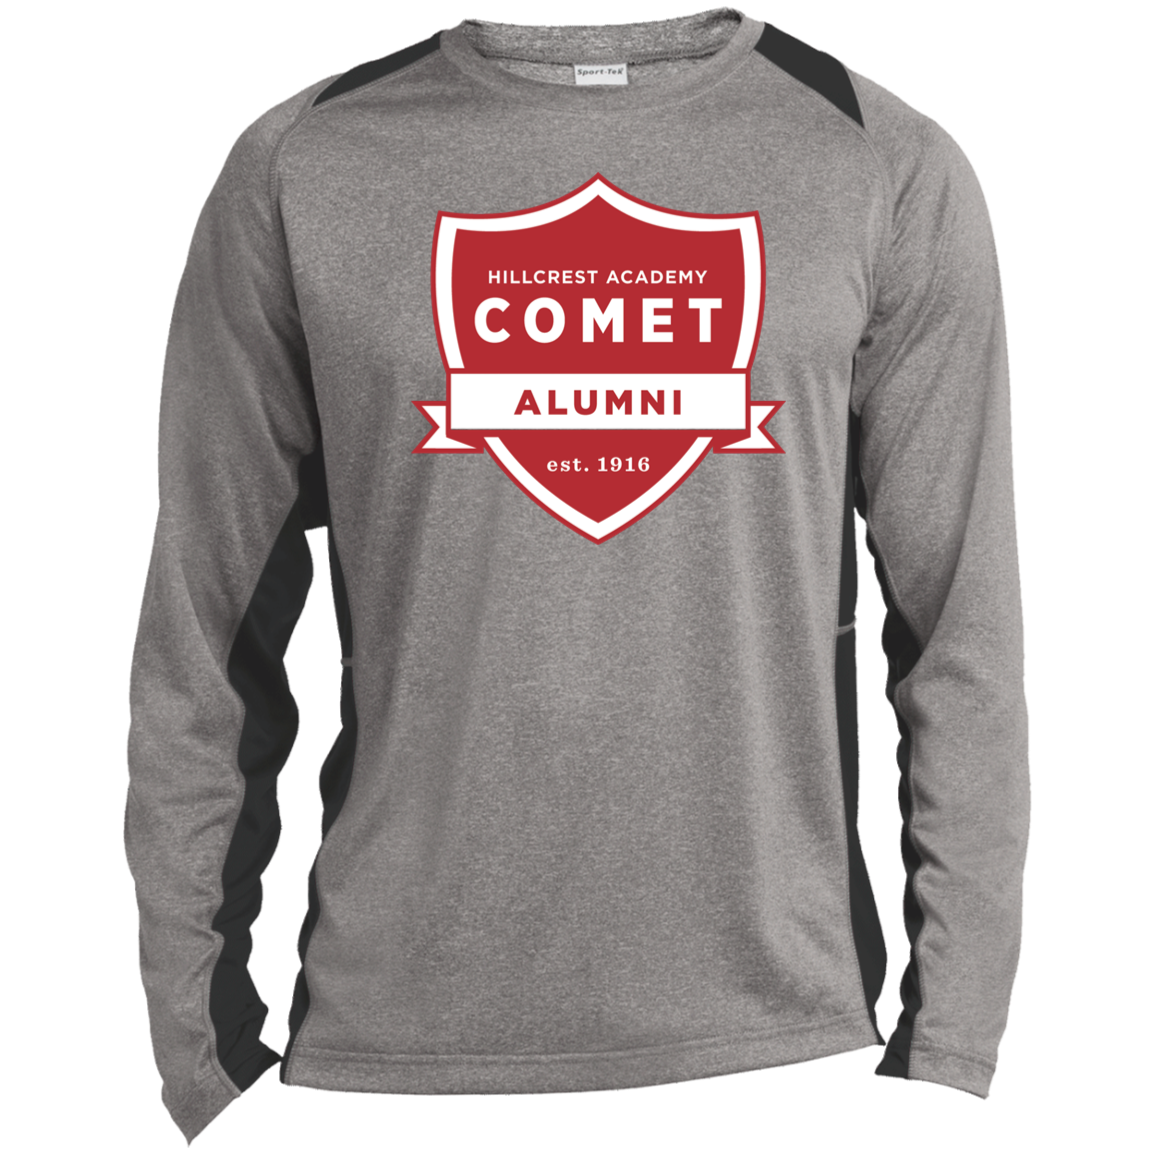 Comet Alumni - Long Sleeve Heather Colorblock Performance Tee